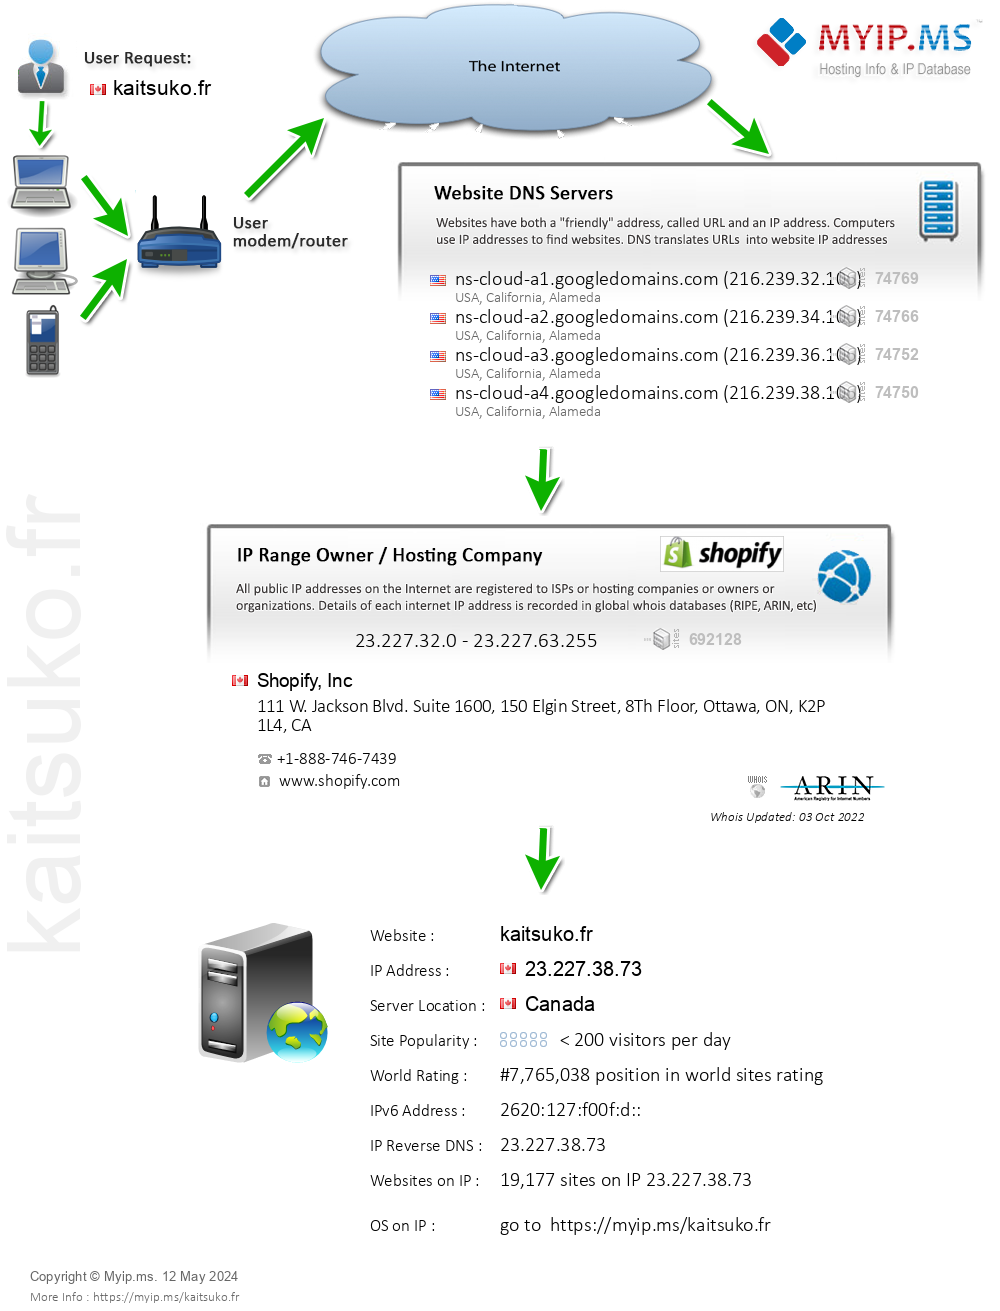 Kaitsuko.fr - Website Hosting Visual IP Diagram